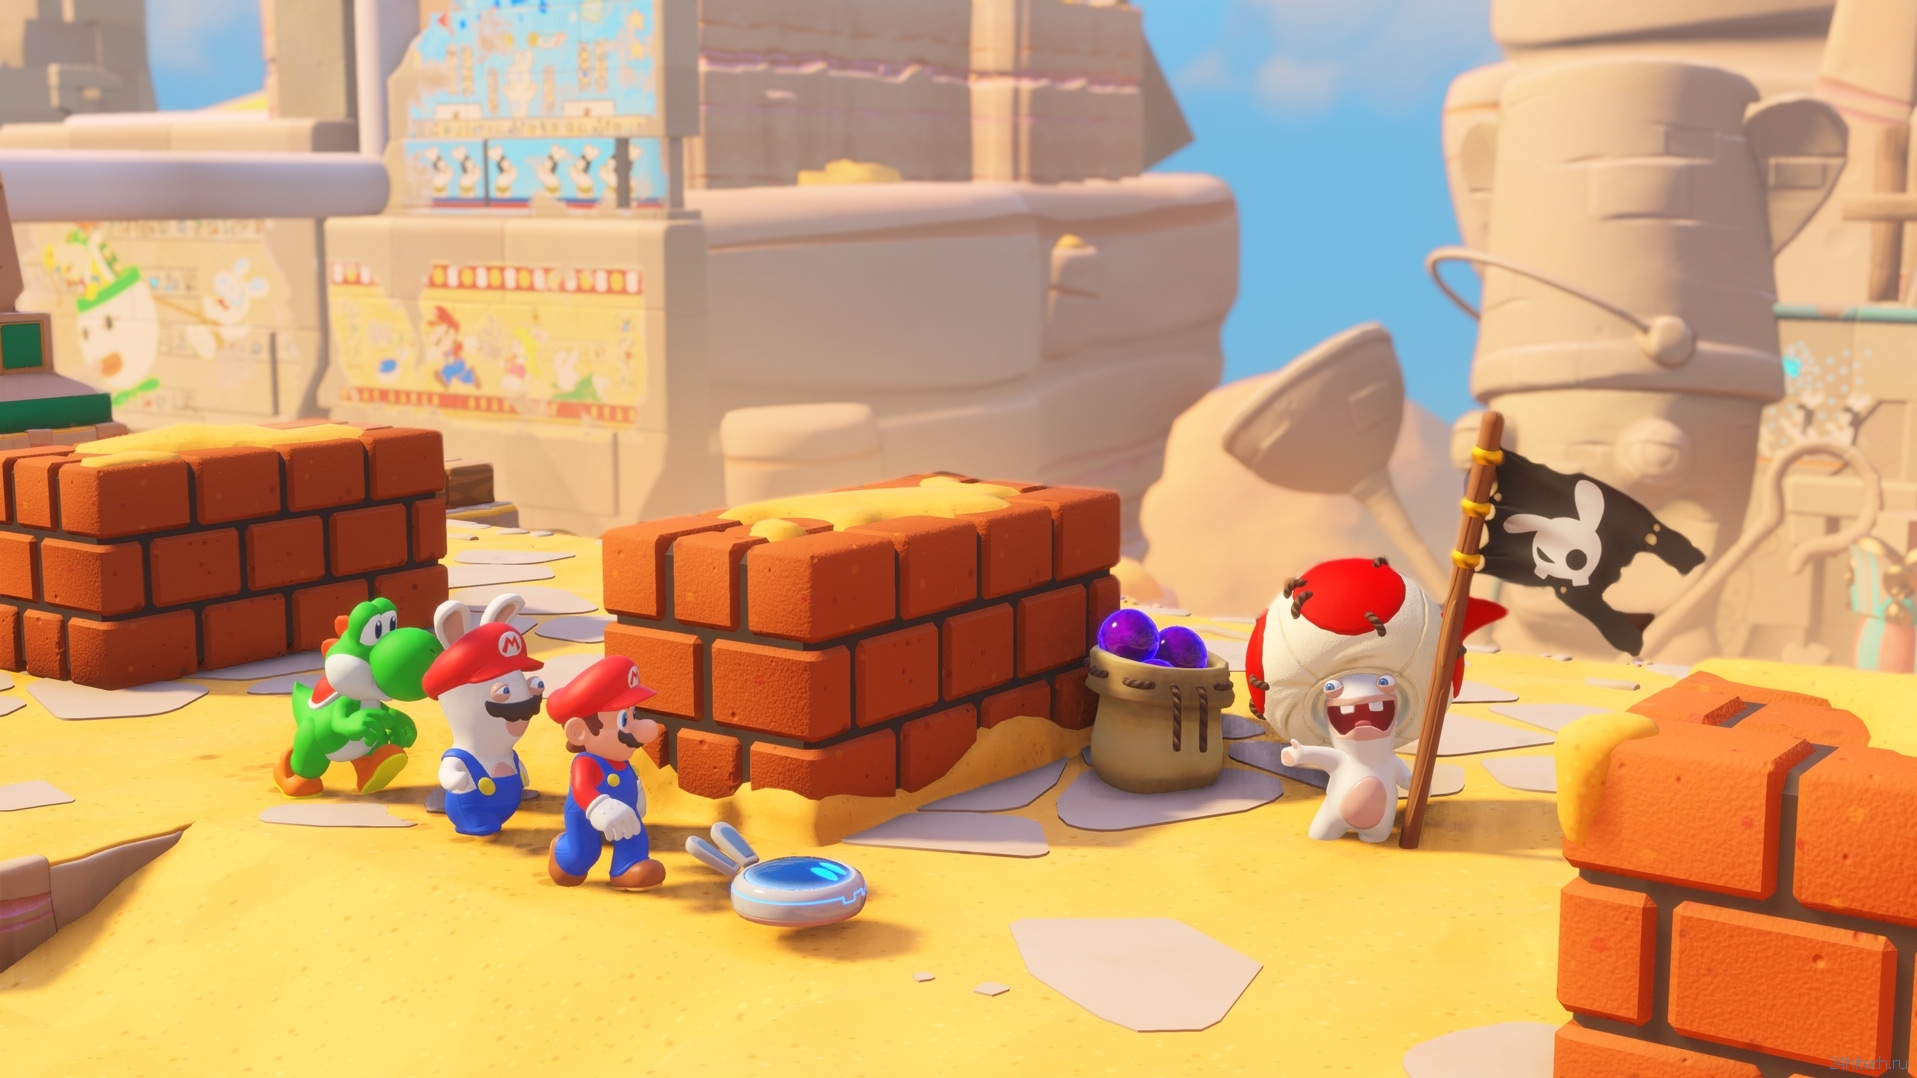 Обзор игры Mario + Rabbids: Kingdom Battle